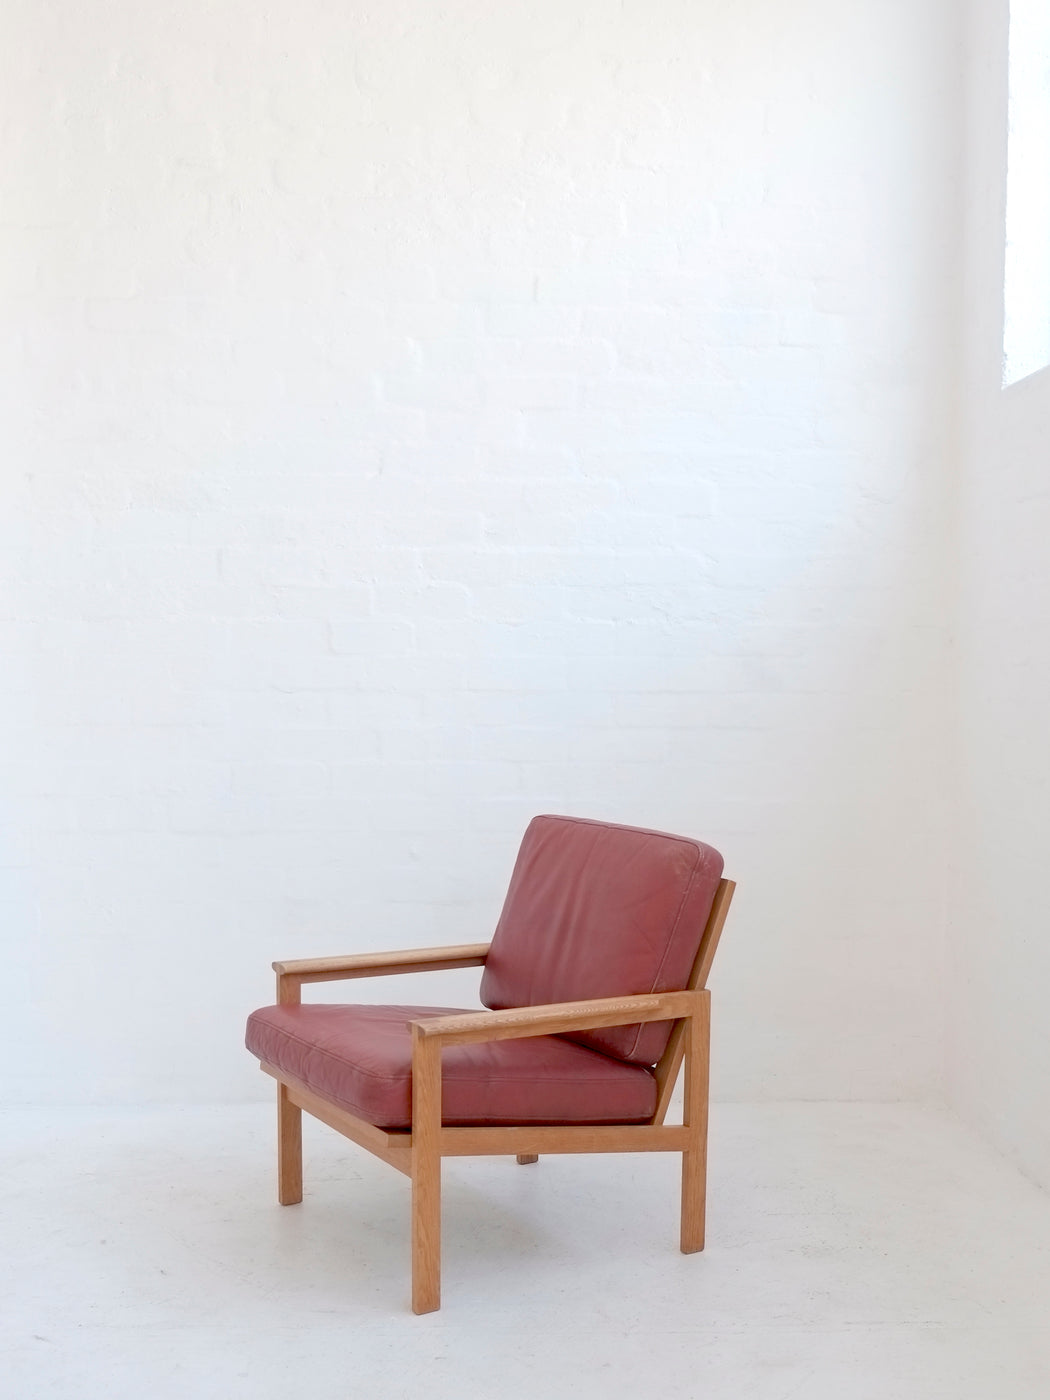 Illum Wikkelso ‘Capella’ Chair